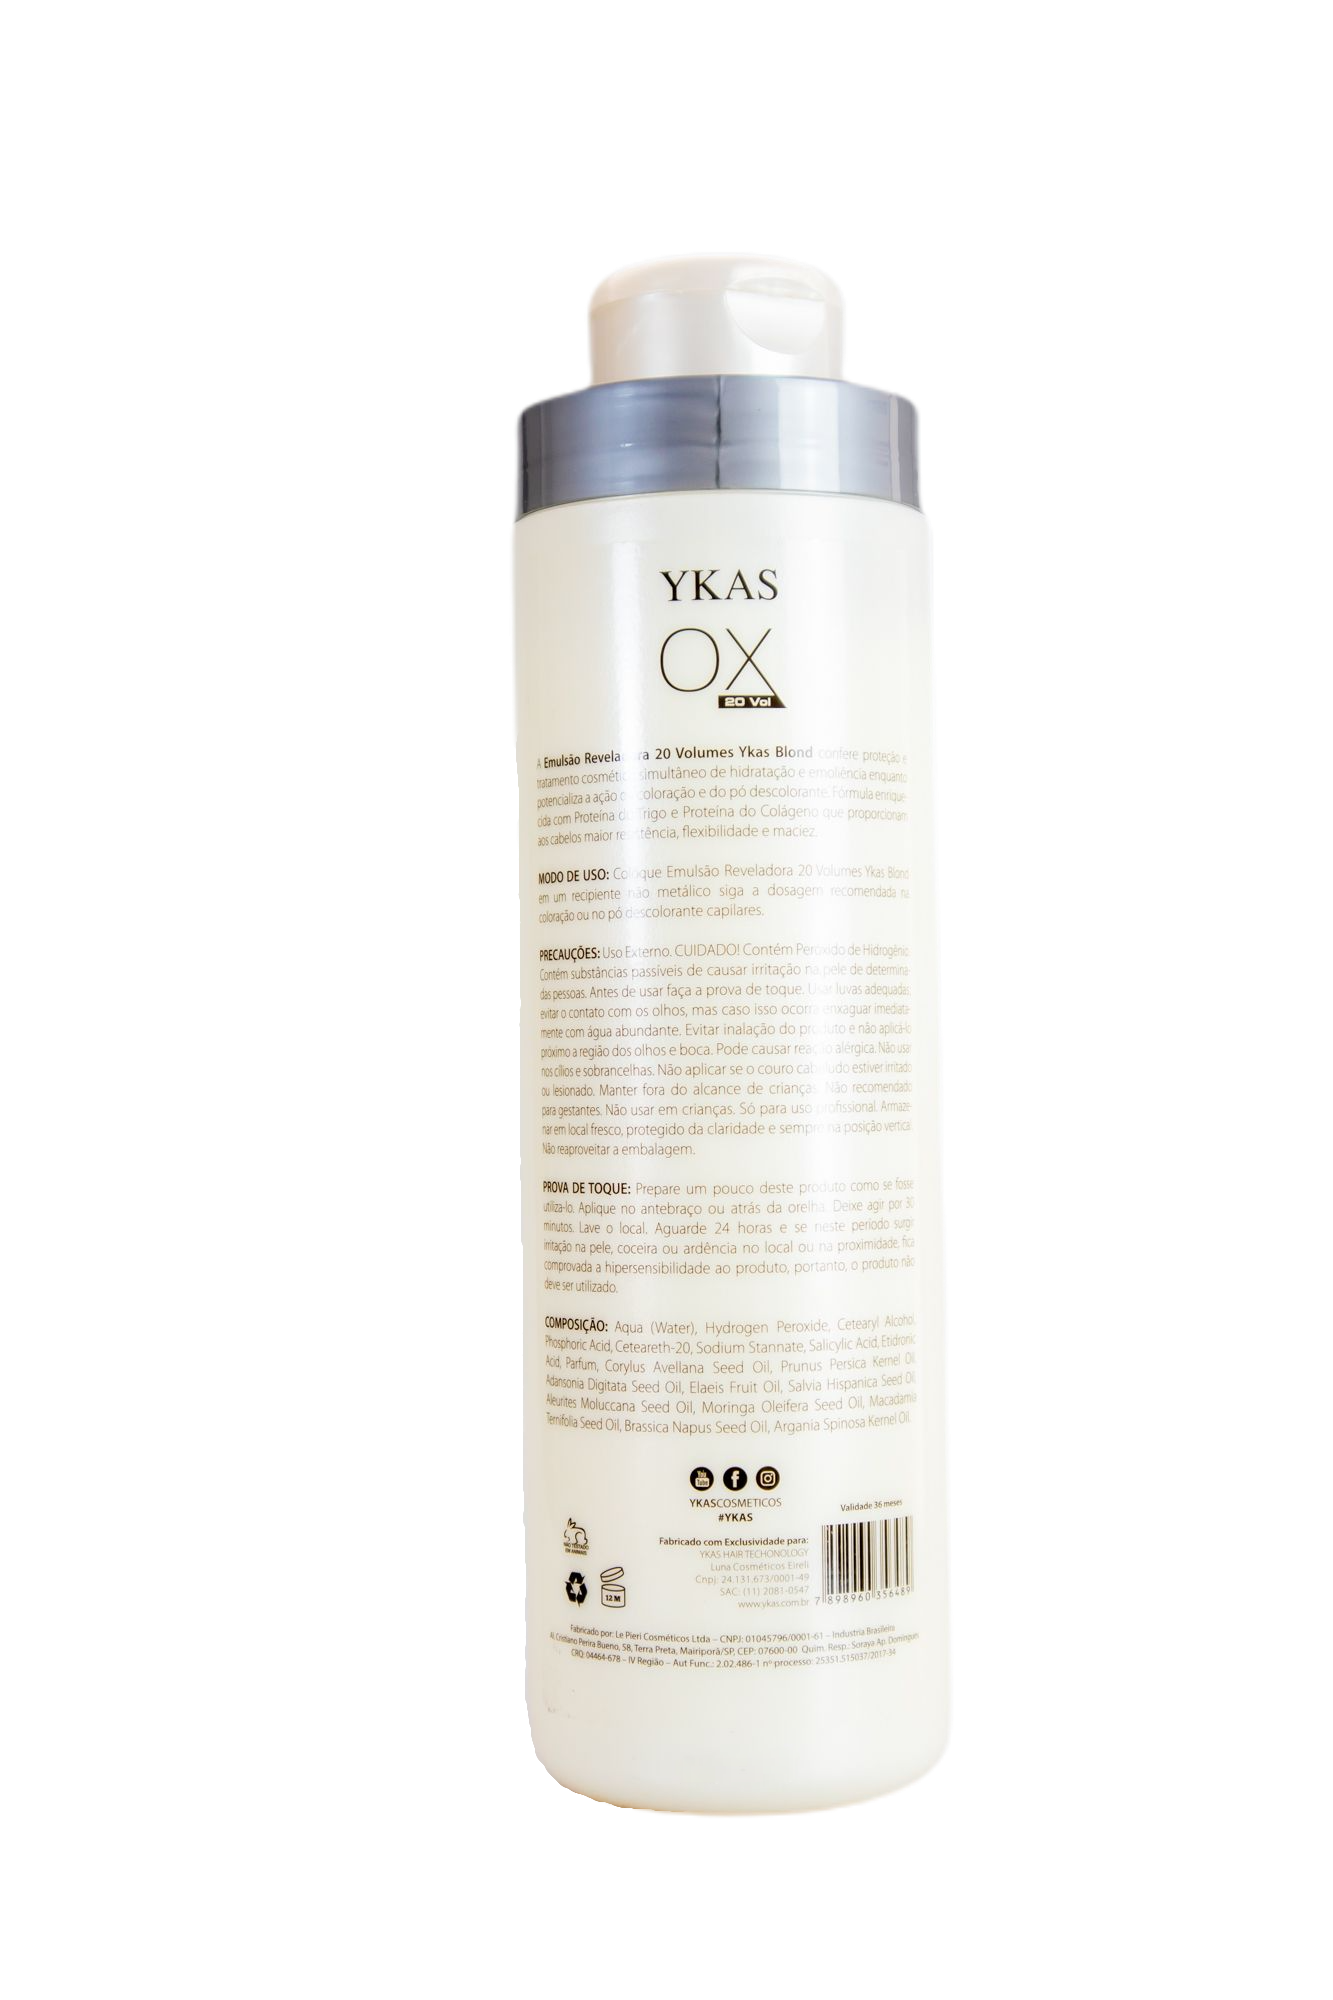 Ykas Brazilian Hair Treatment Professional Blond Oxidizing Emulsion Hair Treatment OX 20 6% 900ml - Ykas